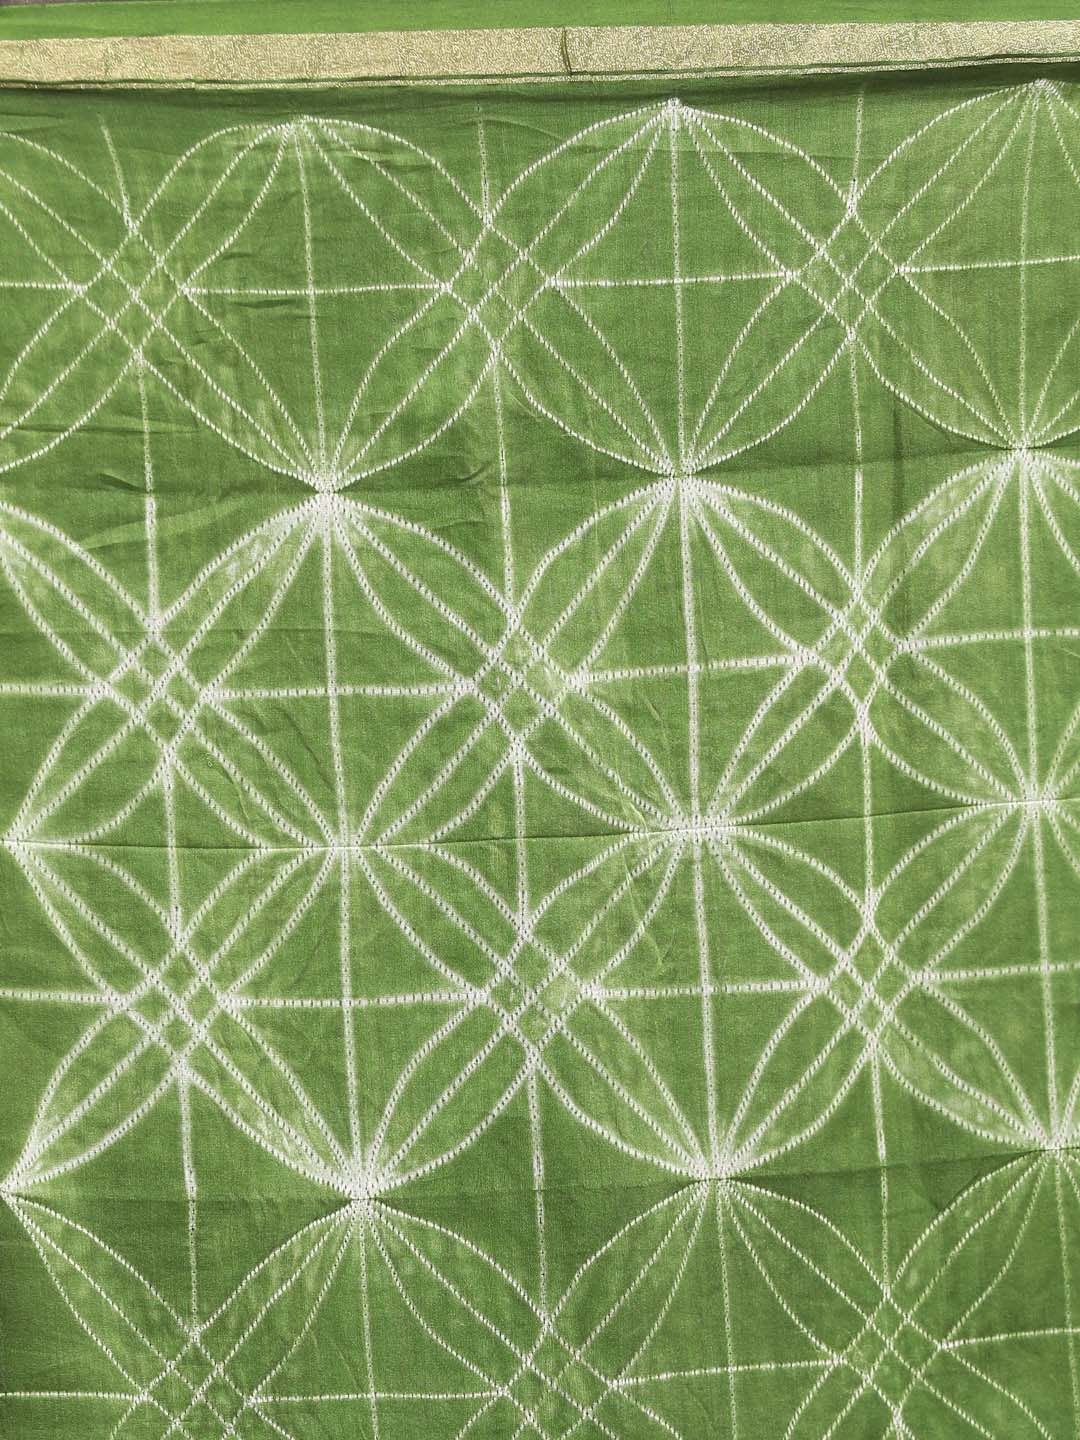 Indethnic Shibori Silk Cotton Saree in Green - Saree Detail View